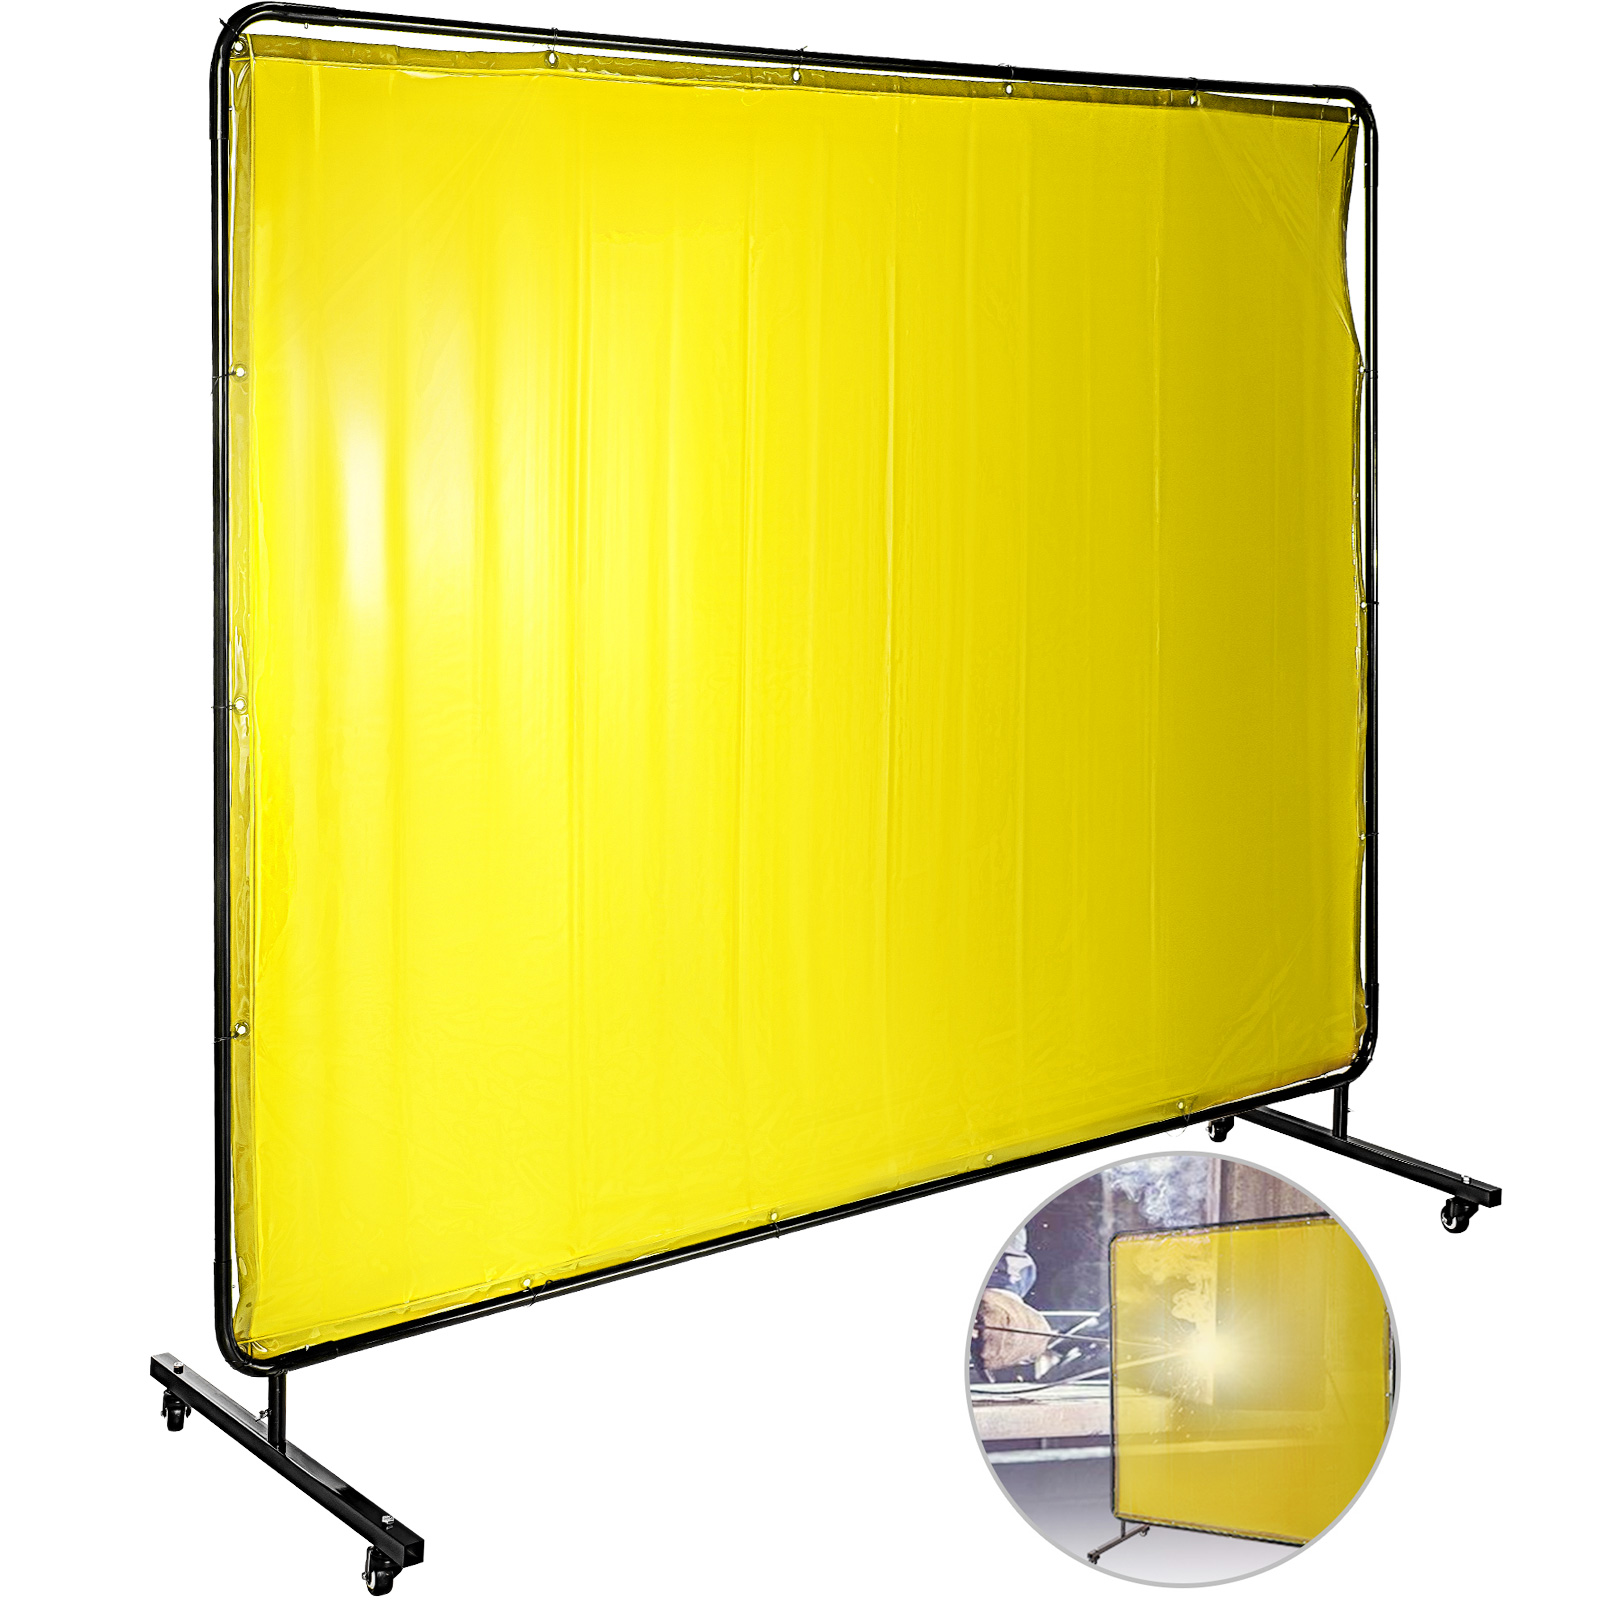 Welding Curtain Welding Screens&nbsp6' x 8' Flame Retardant Vinyl with Frame Yellow от Vevor Many GEOs